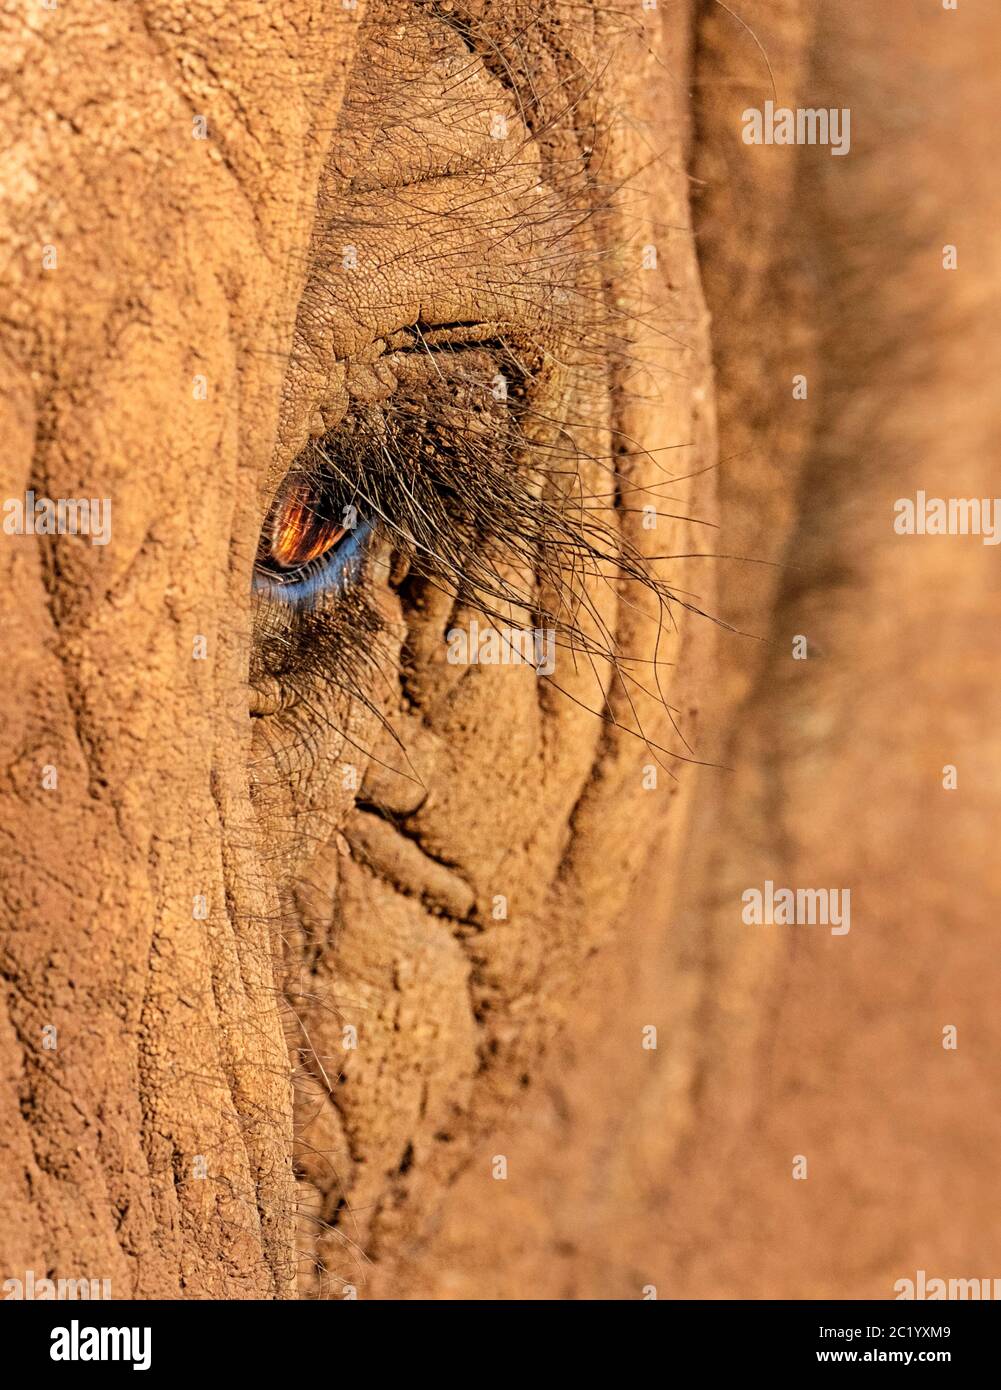 African Elephant (Loxodonta Africana) eye. Close-up photograph of the eye and eyelashes. Side view of the animal with its wrinkled reddish skin. Stock Photo